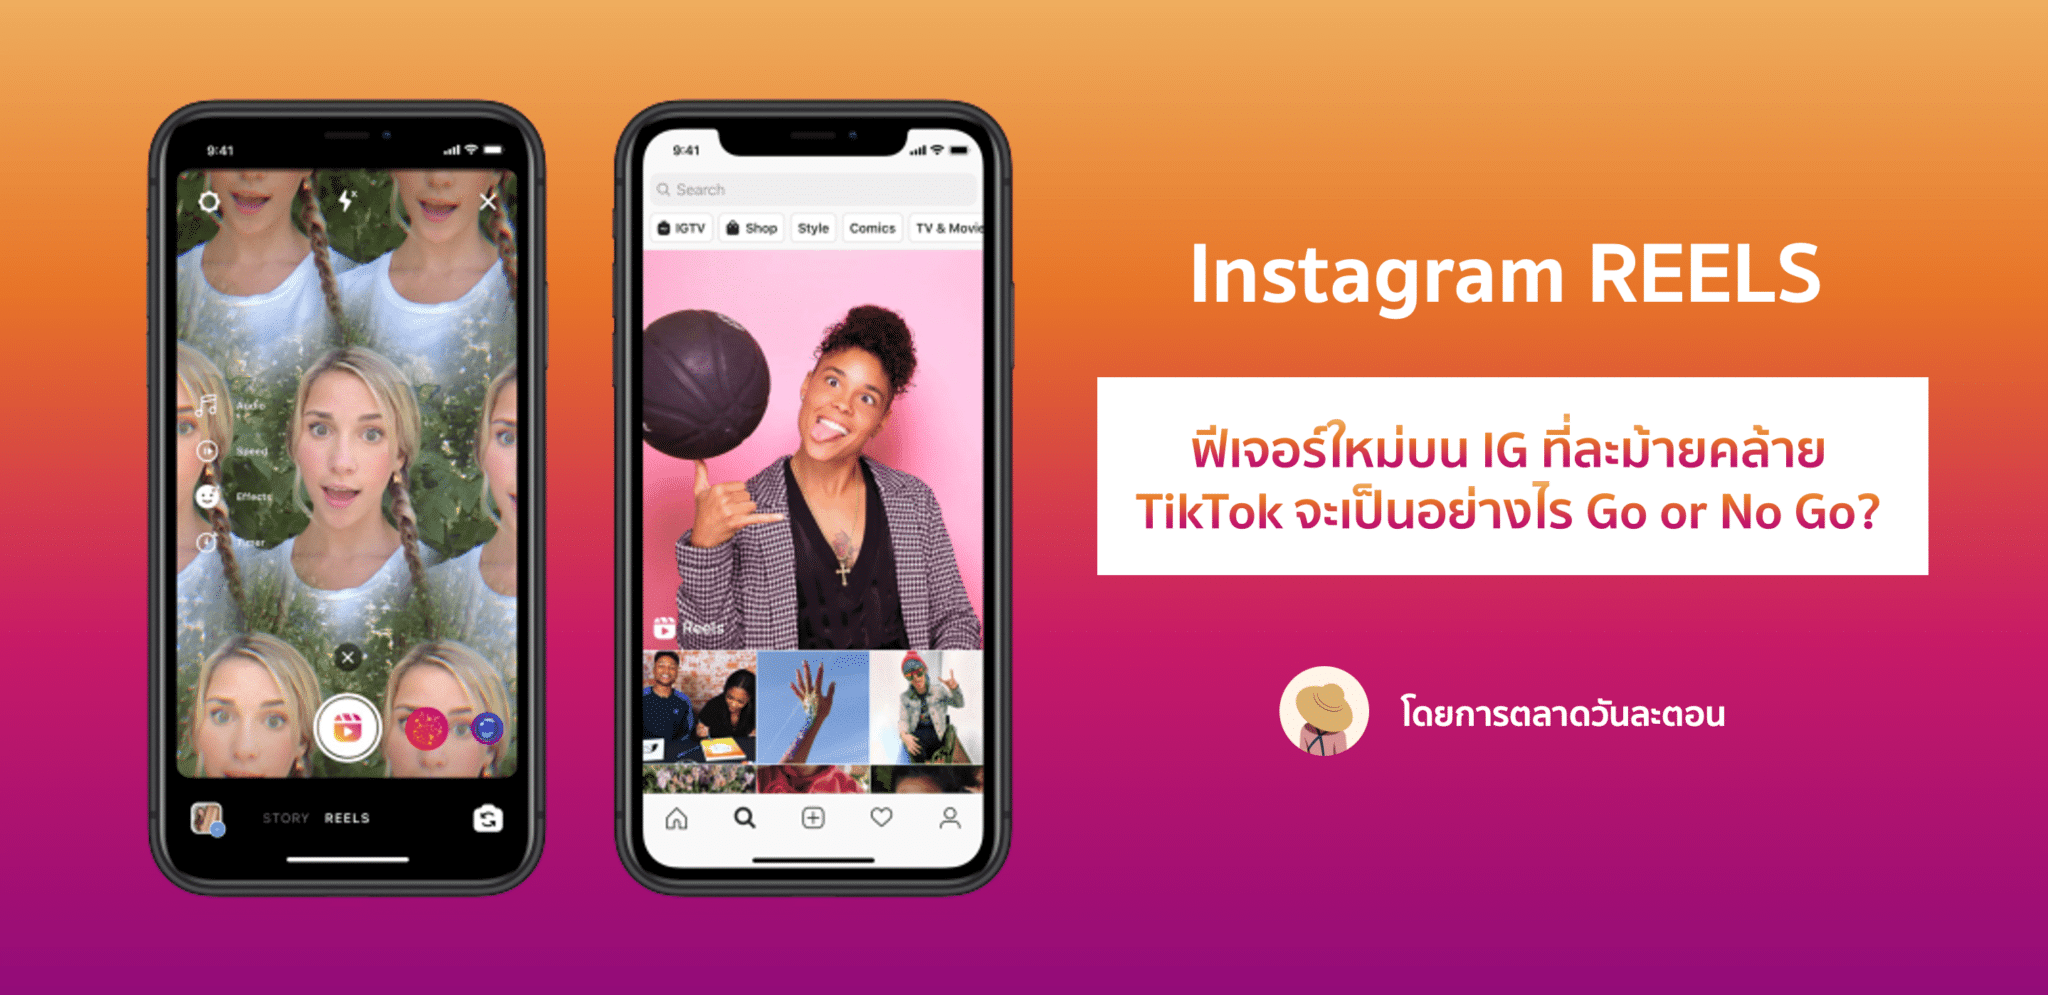 Instagram Reels – ฟีเจอร์ใหม่แบบ TikTok ของ IG